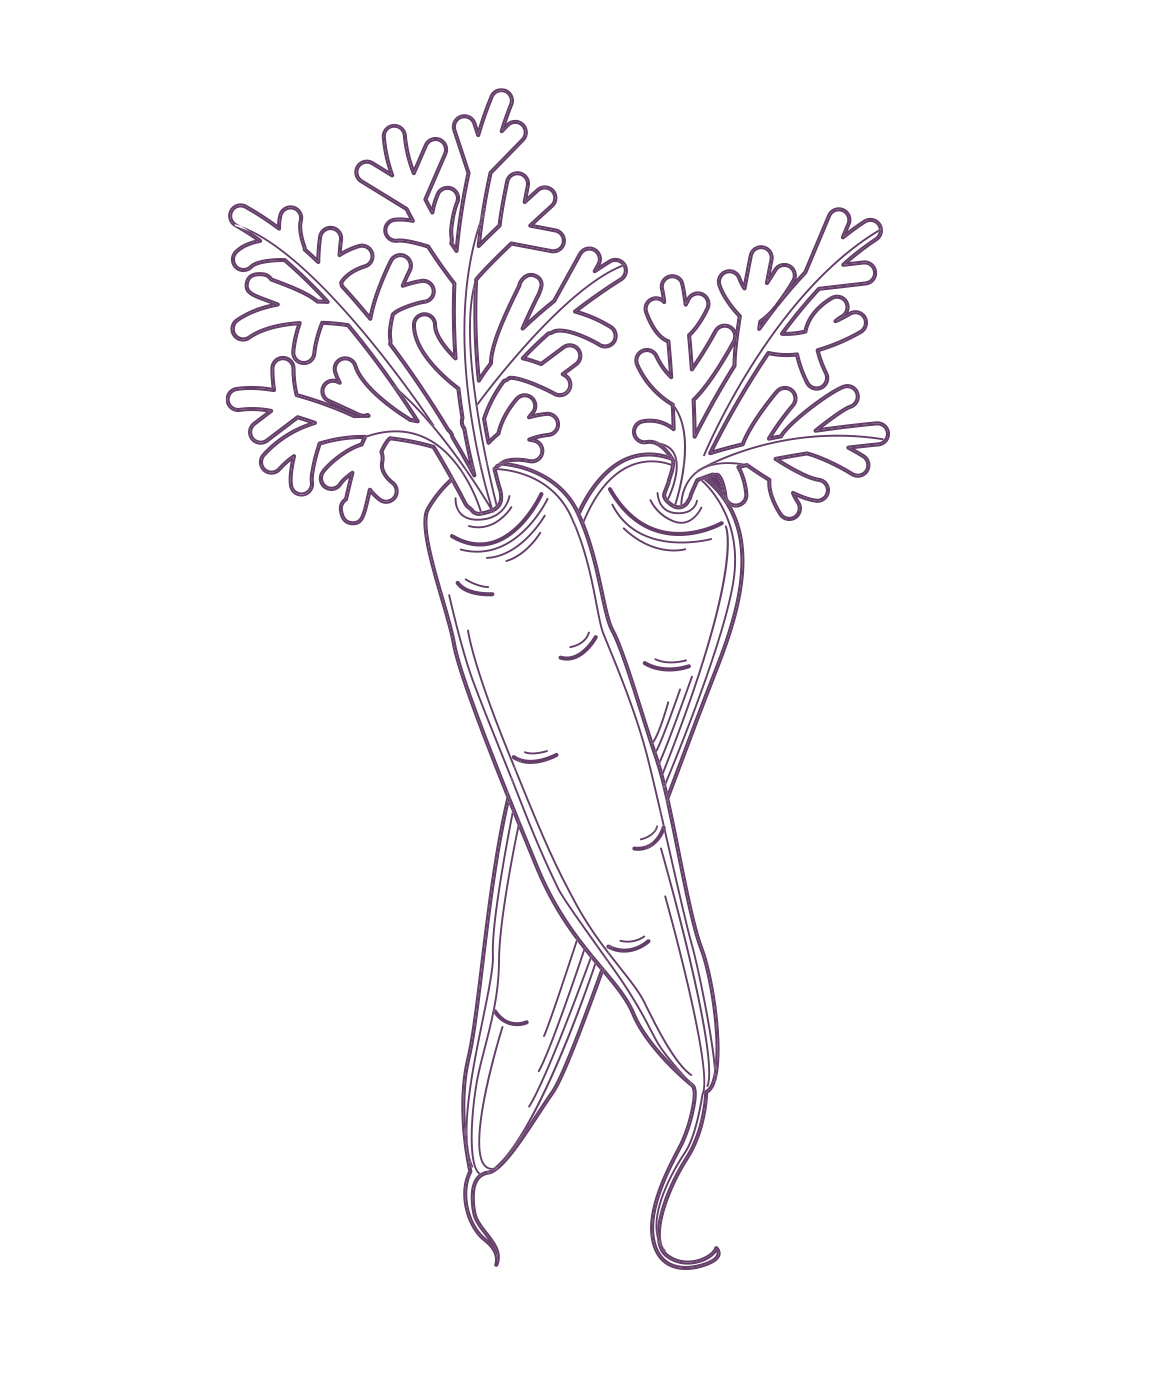 carrots illustration